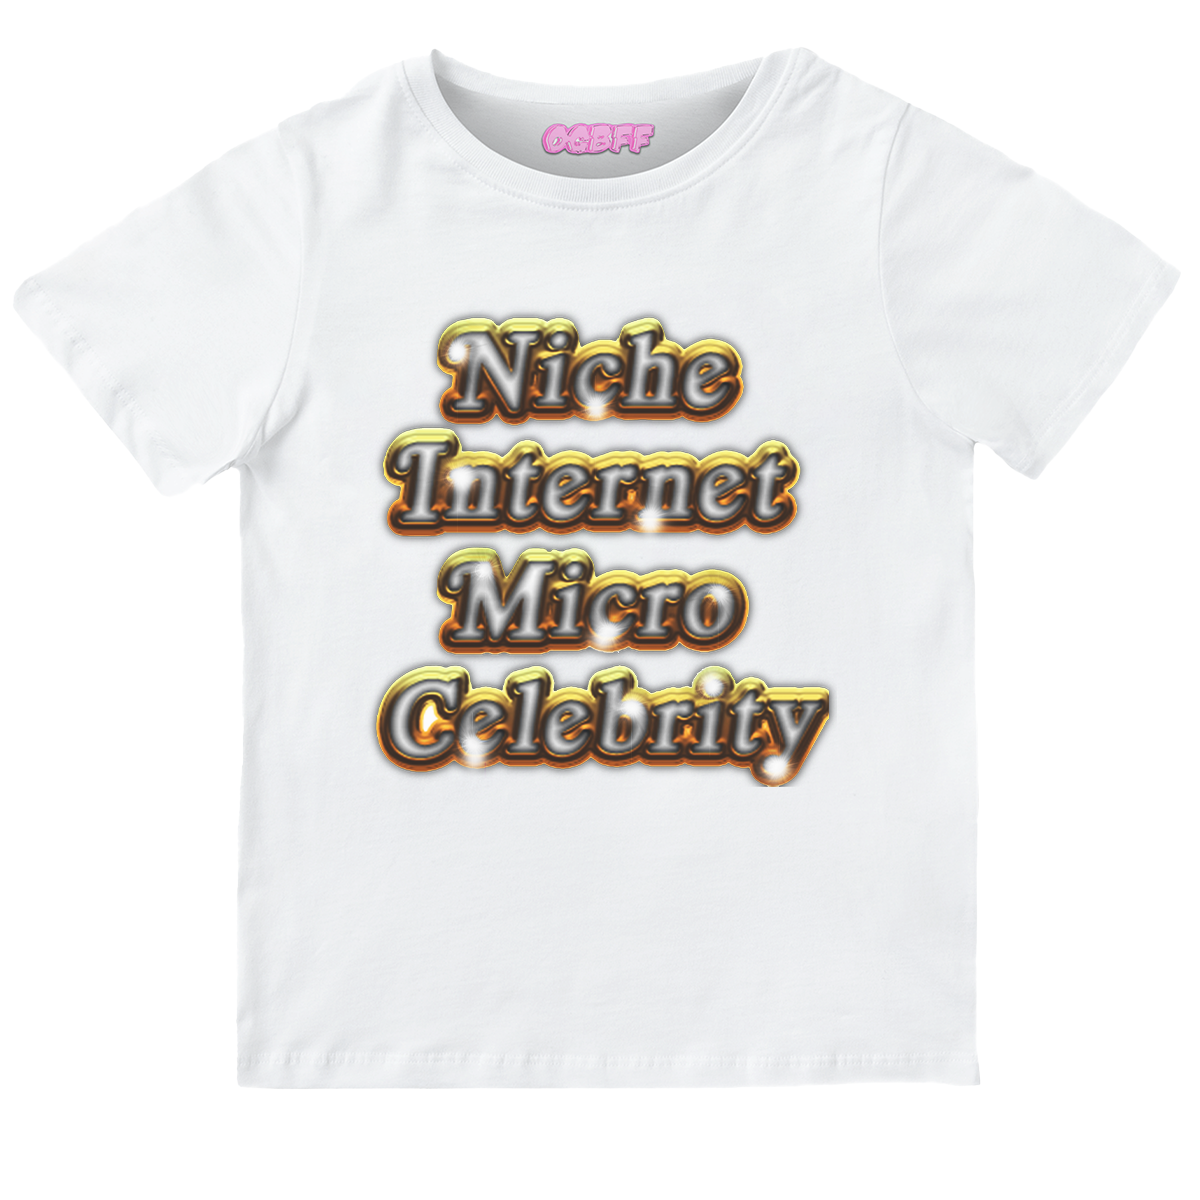 Mini internet t-shirt for celebrities